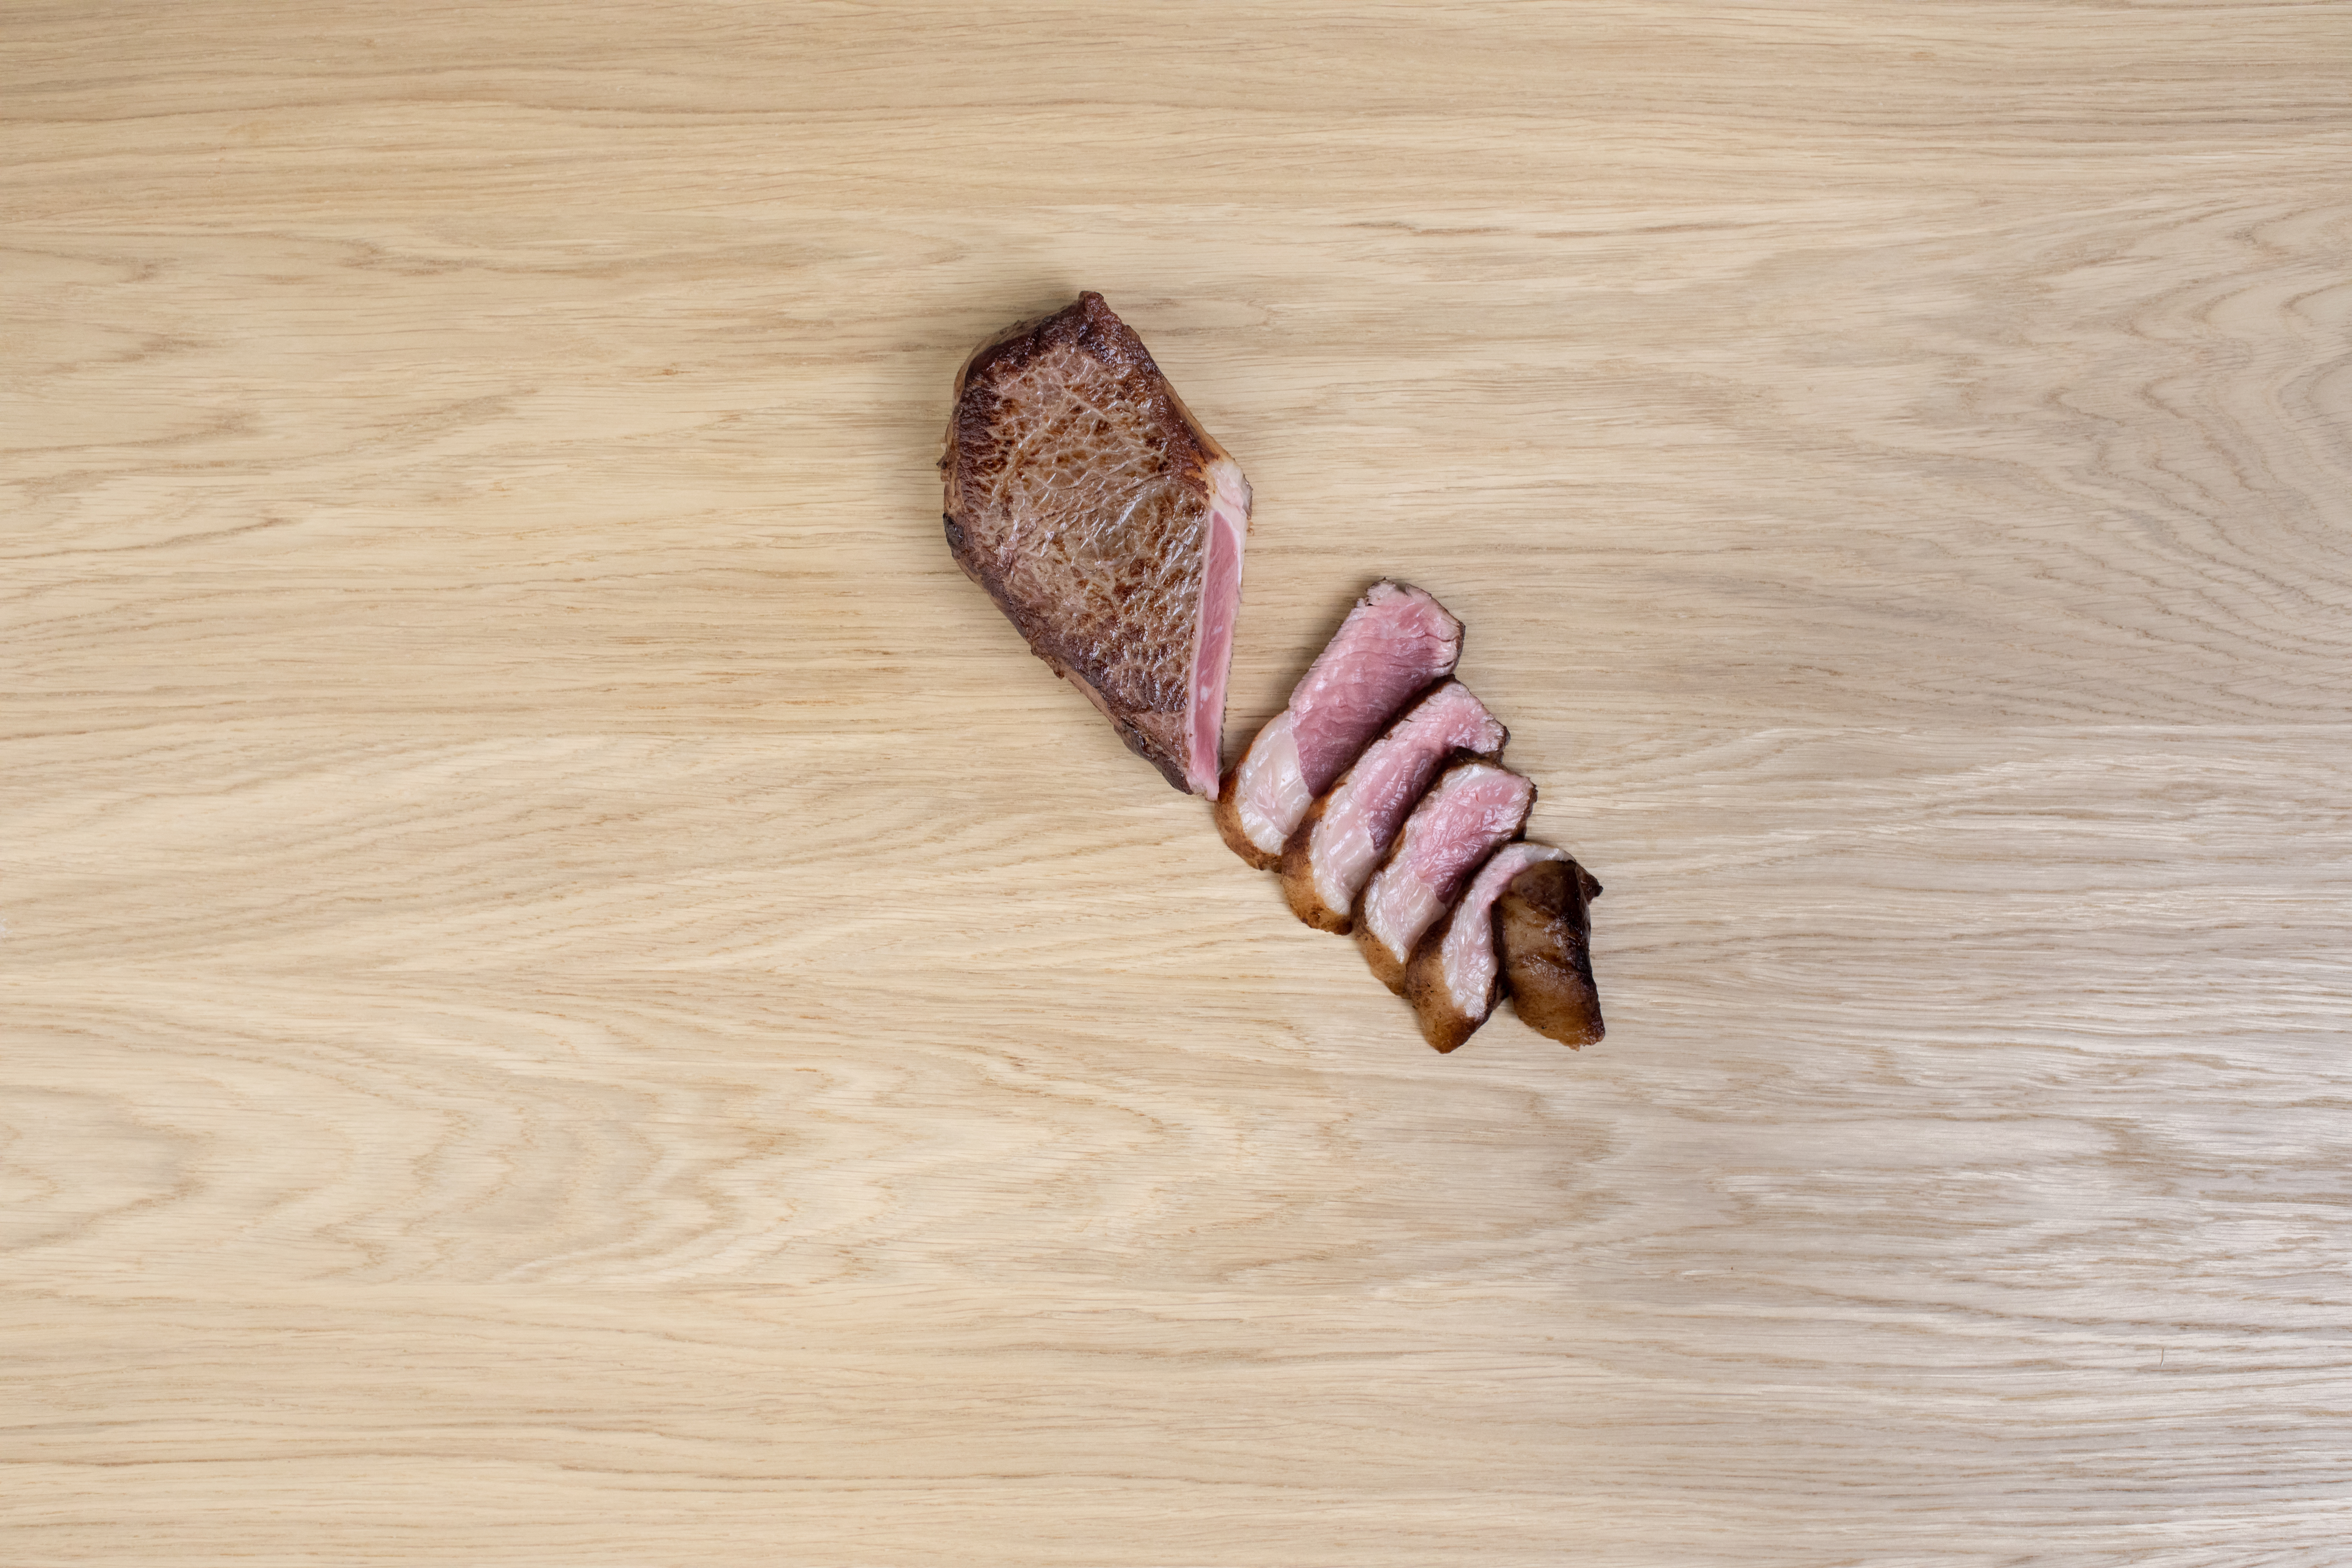 High quality steak cut on table